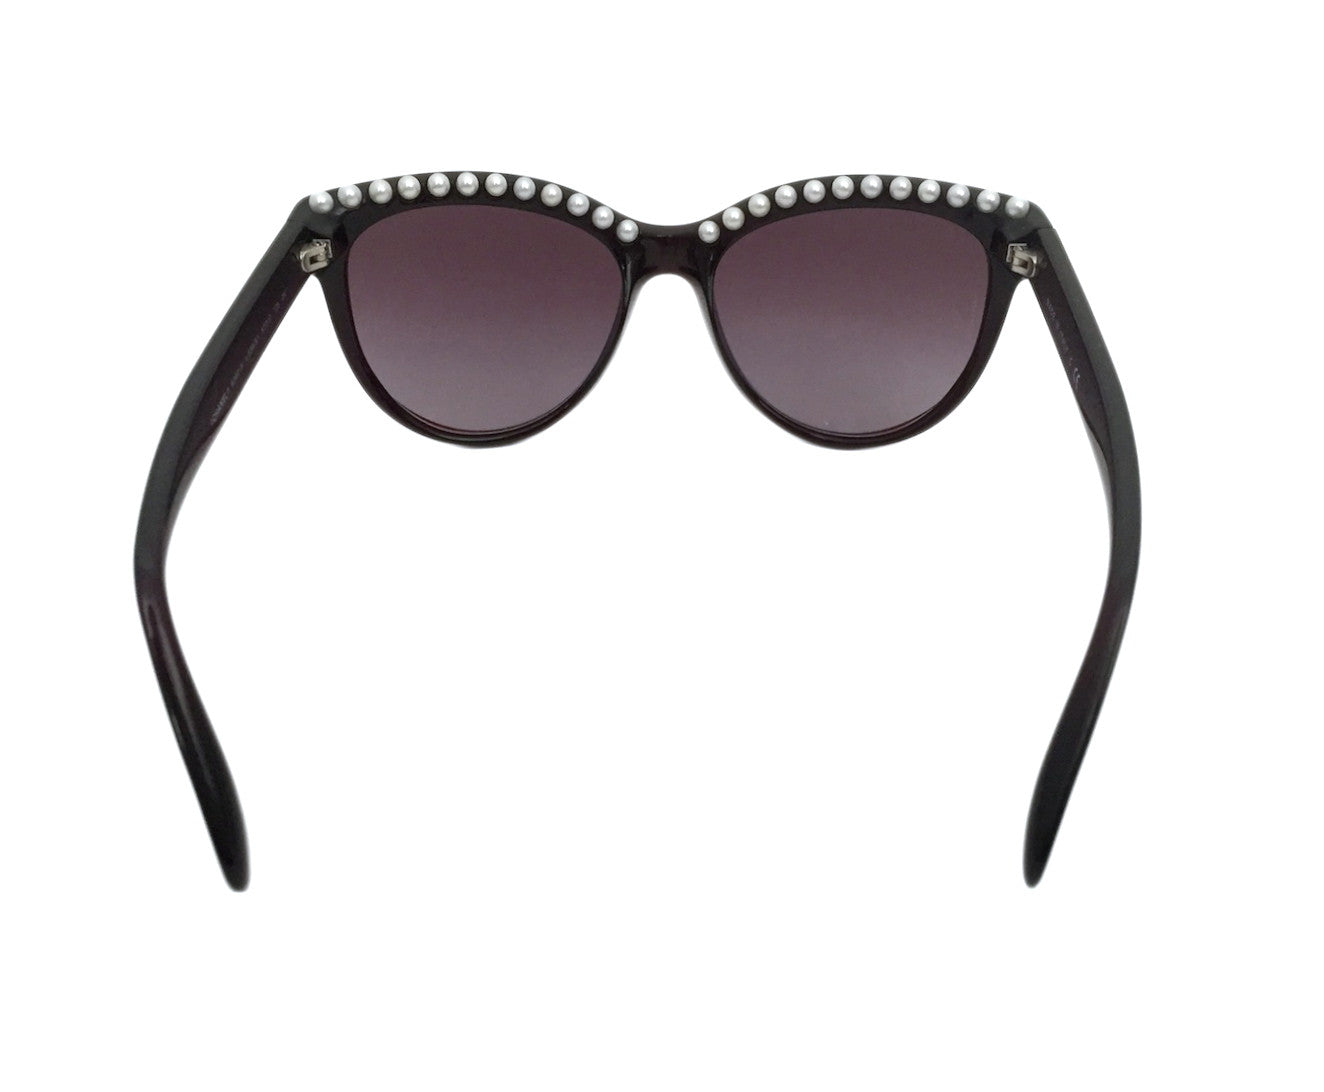 Authentic Chanel Pearl Cat Eye Runway Sunglasses